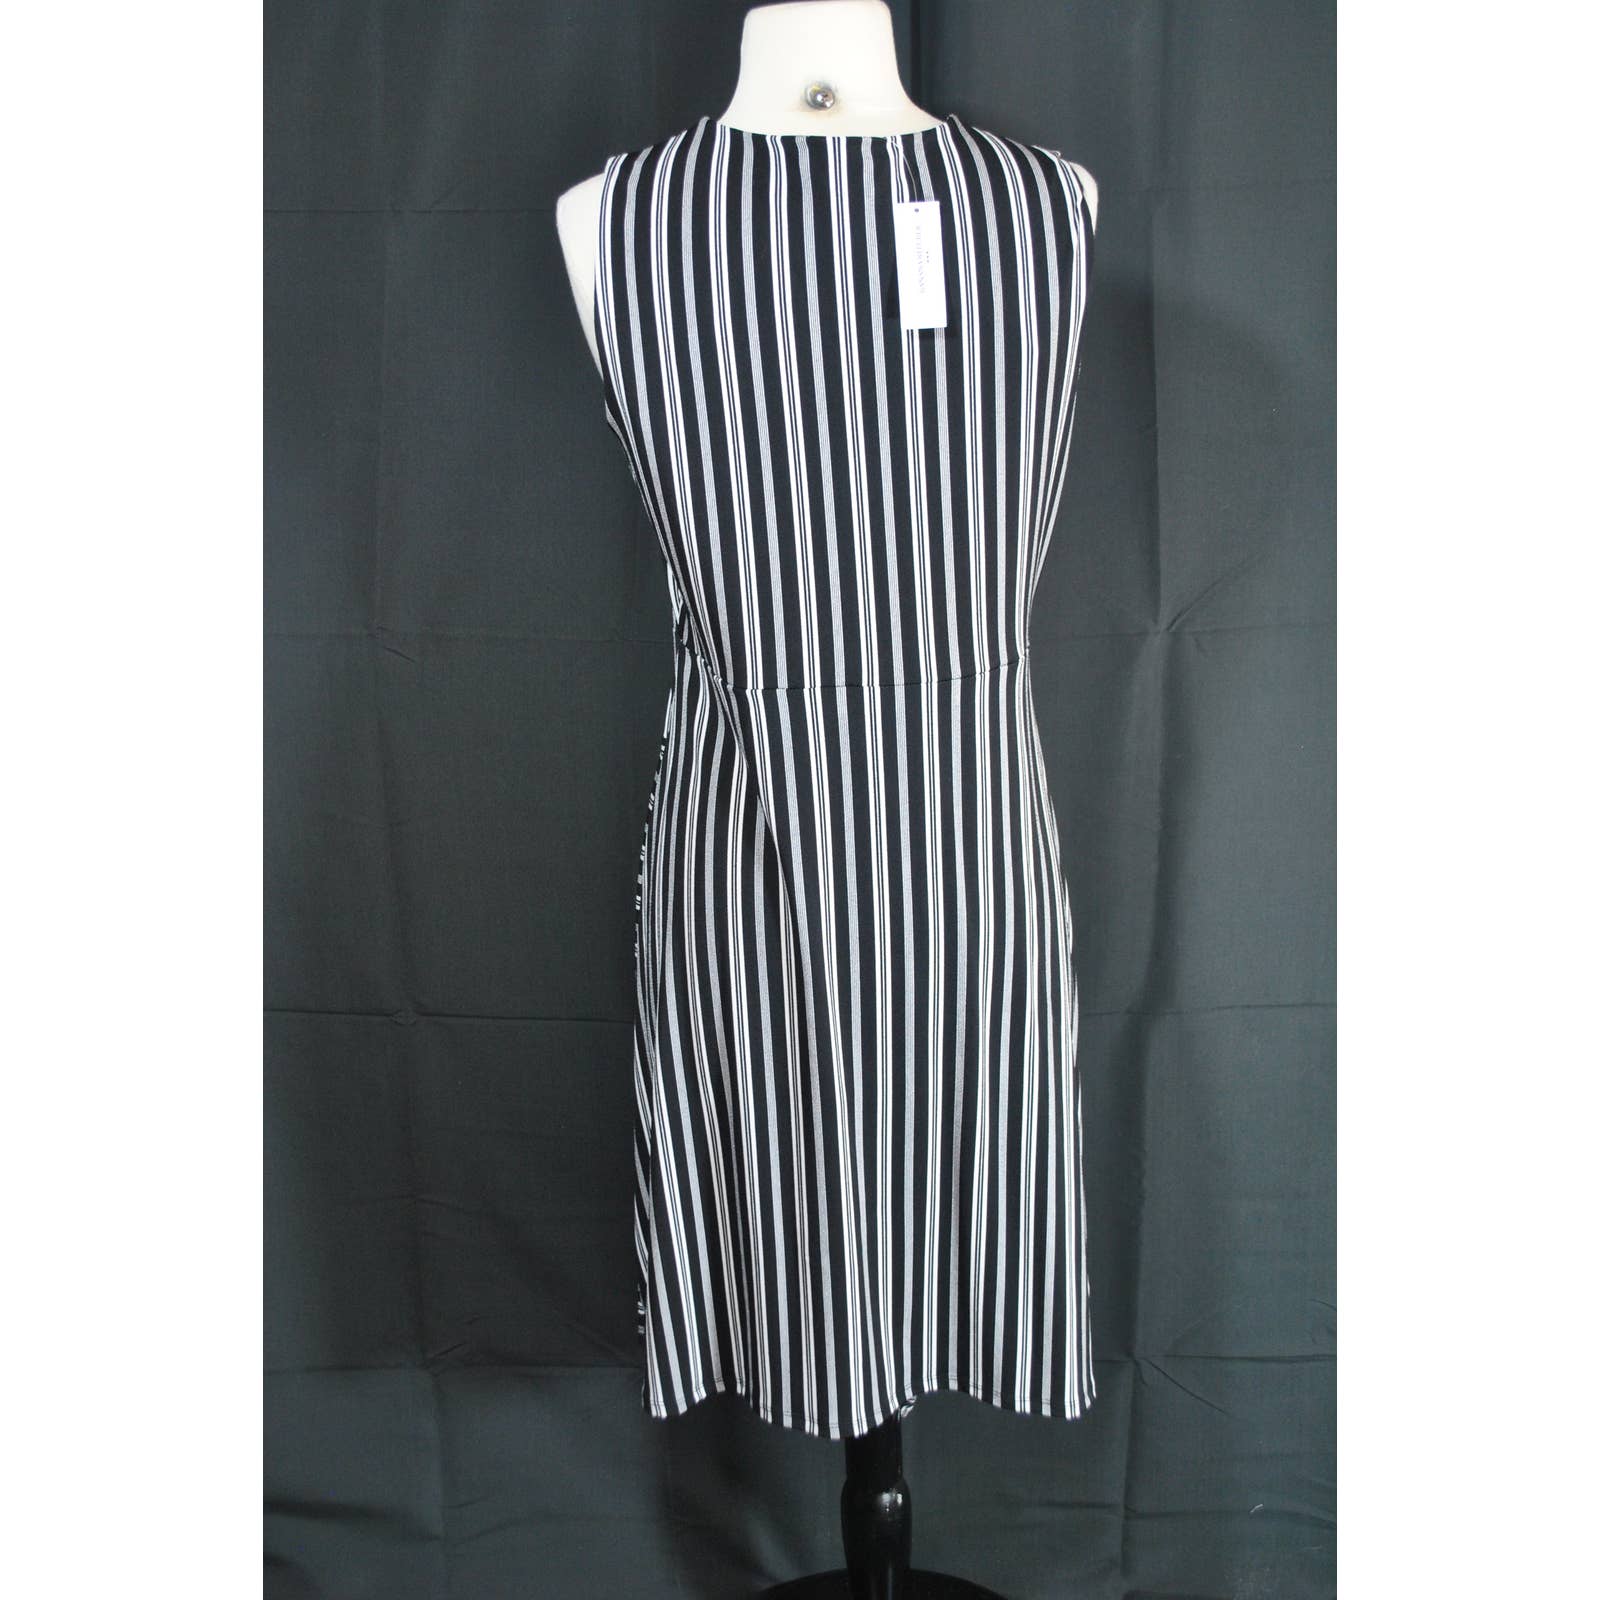 NWT Banana Republic Black and White Striped Dress - S